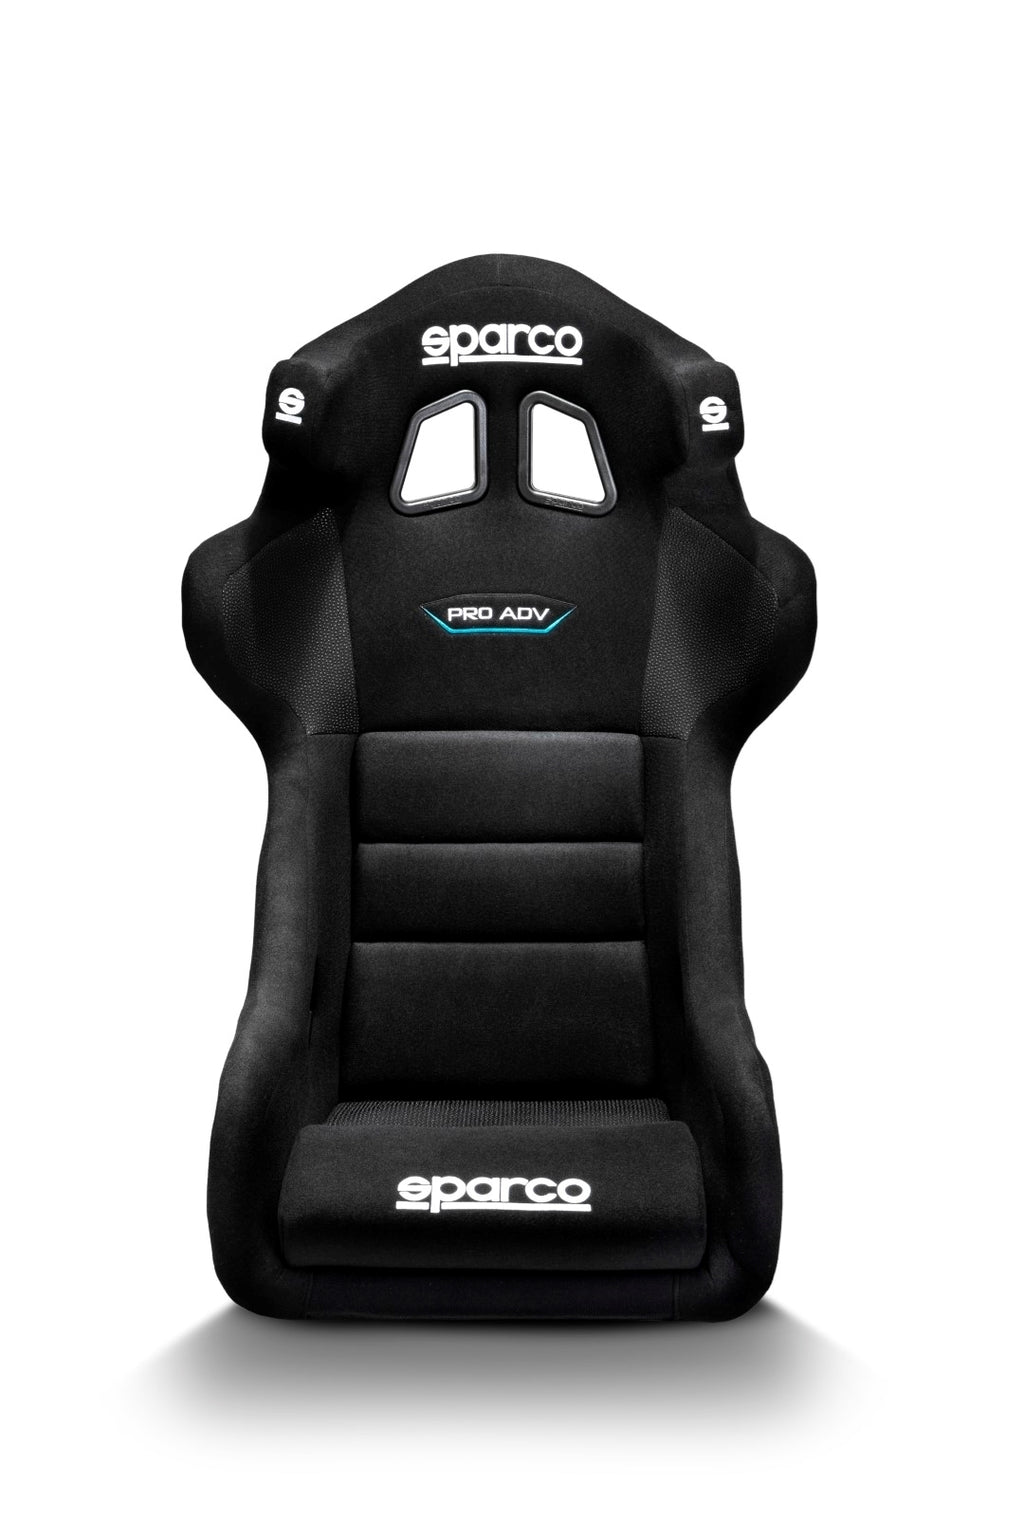 Sparco - Pro ADV QRT Competition Seat